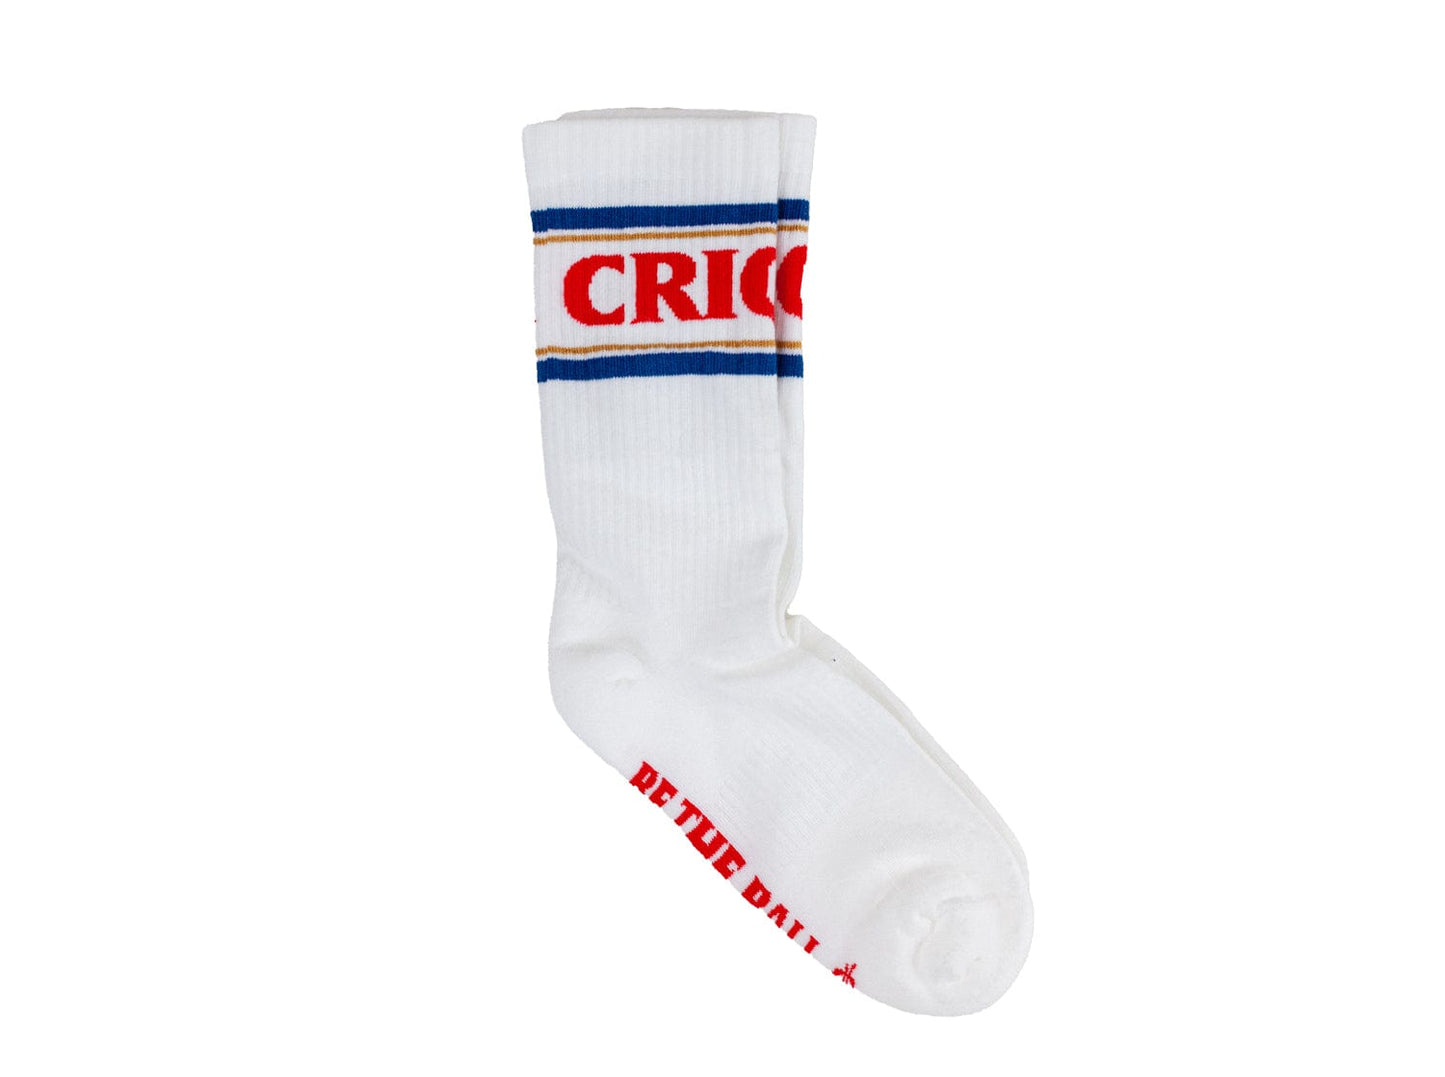 Tubular Socks - Criquet - Red & Blue